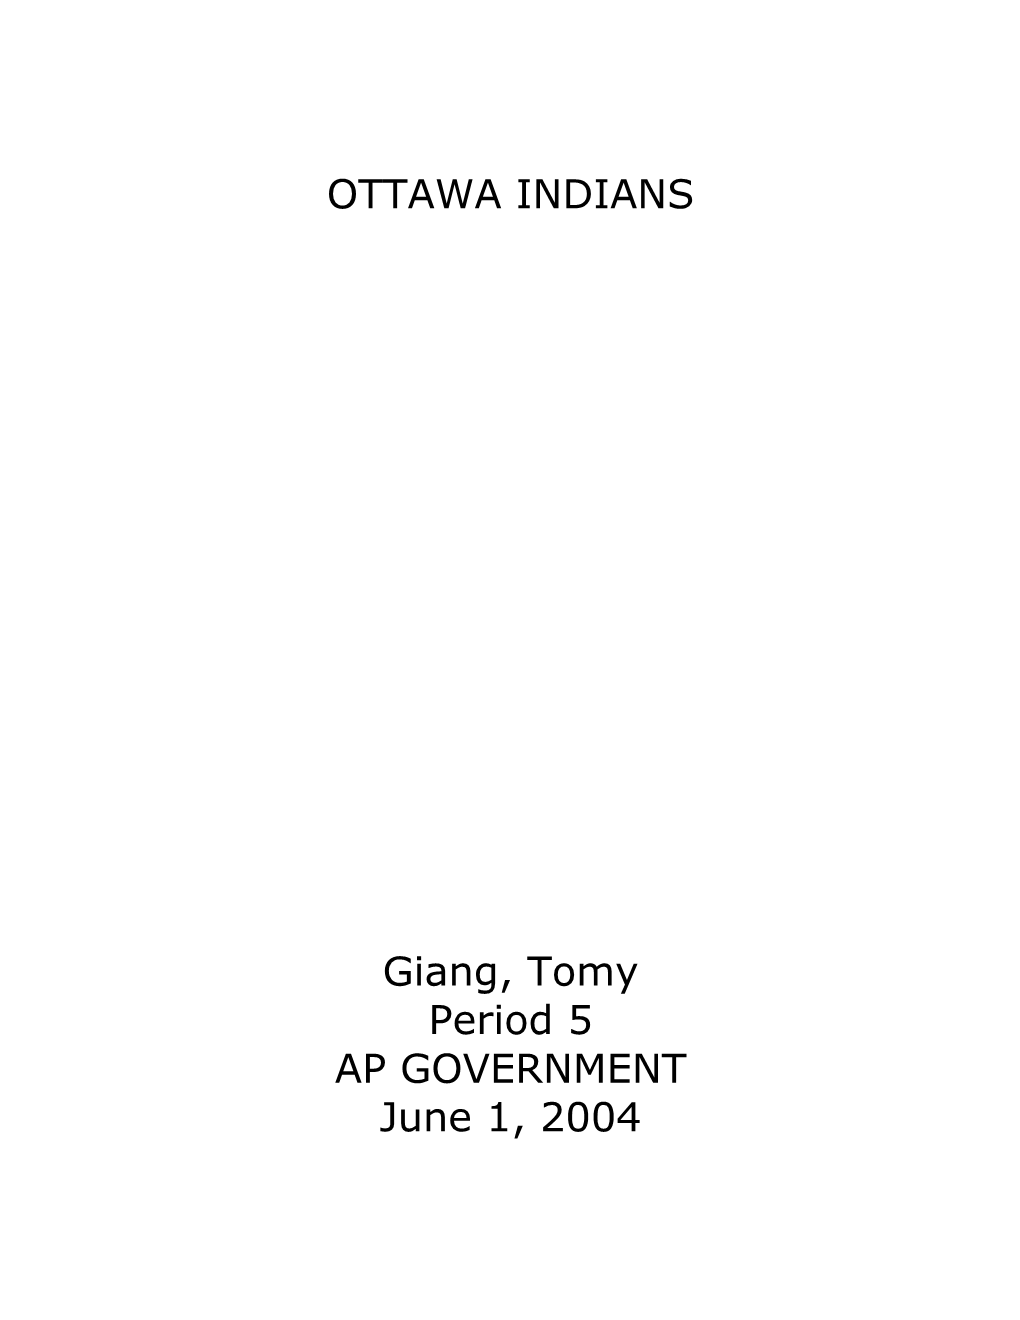 Ottawa Indians